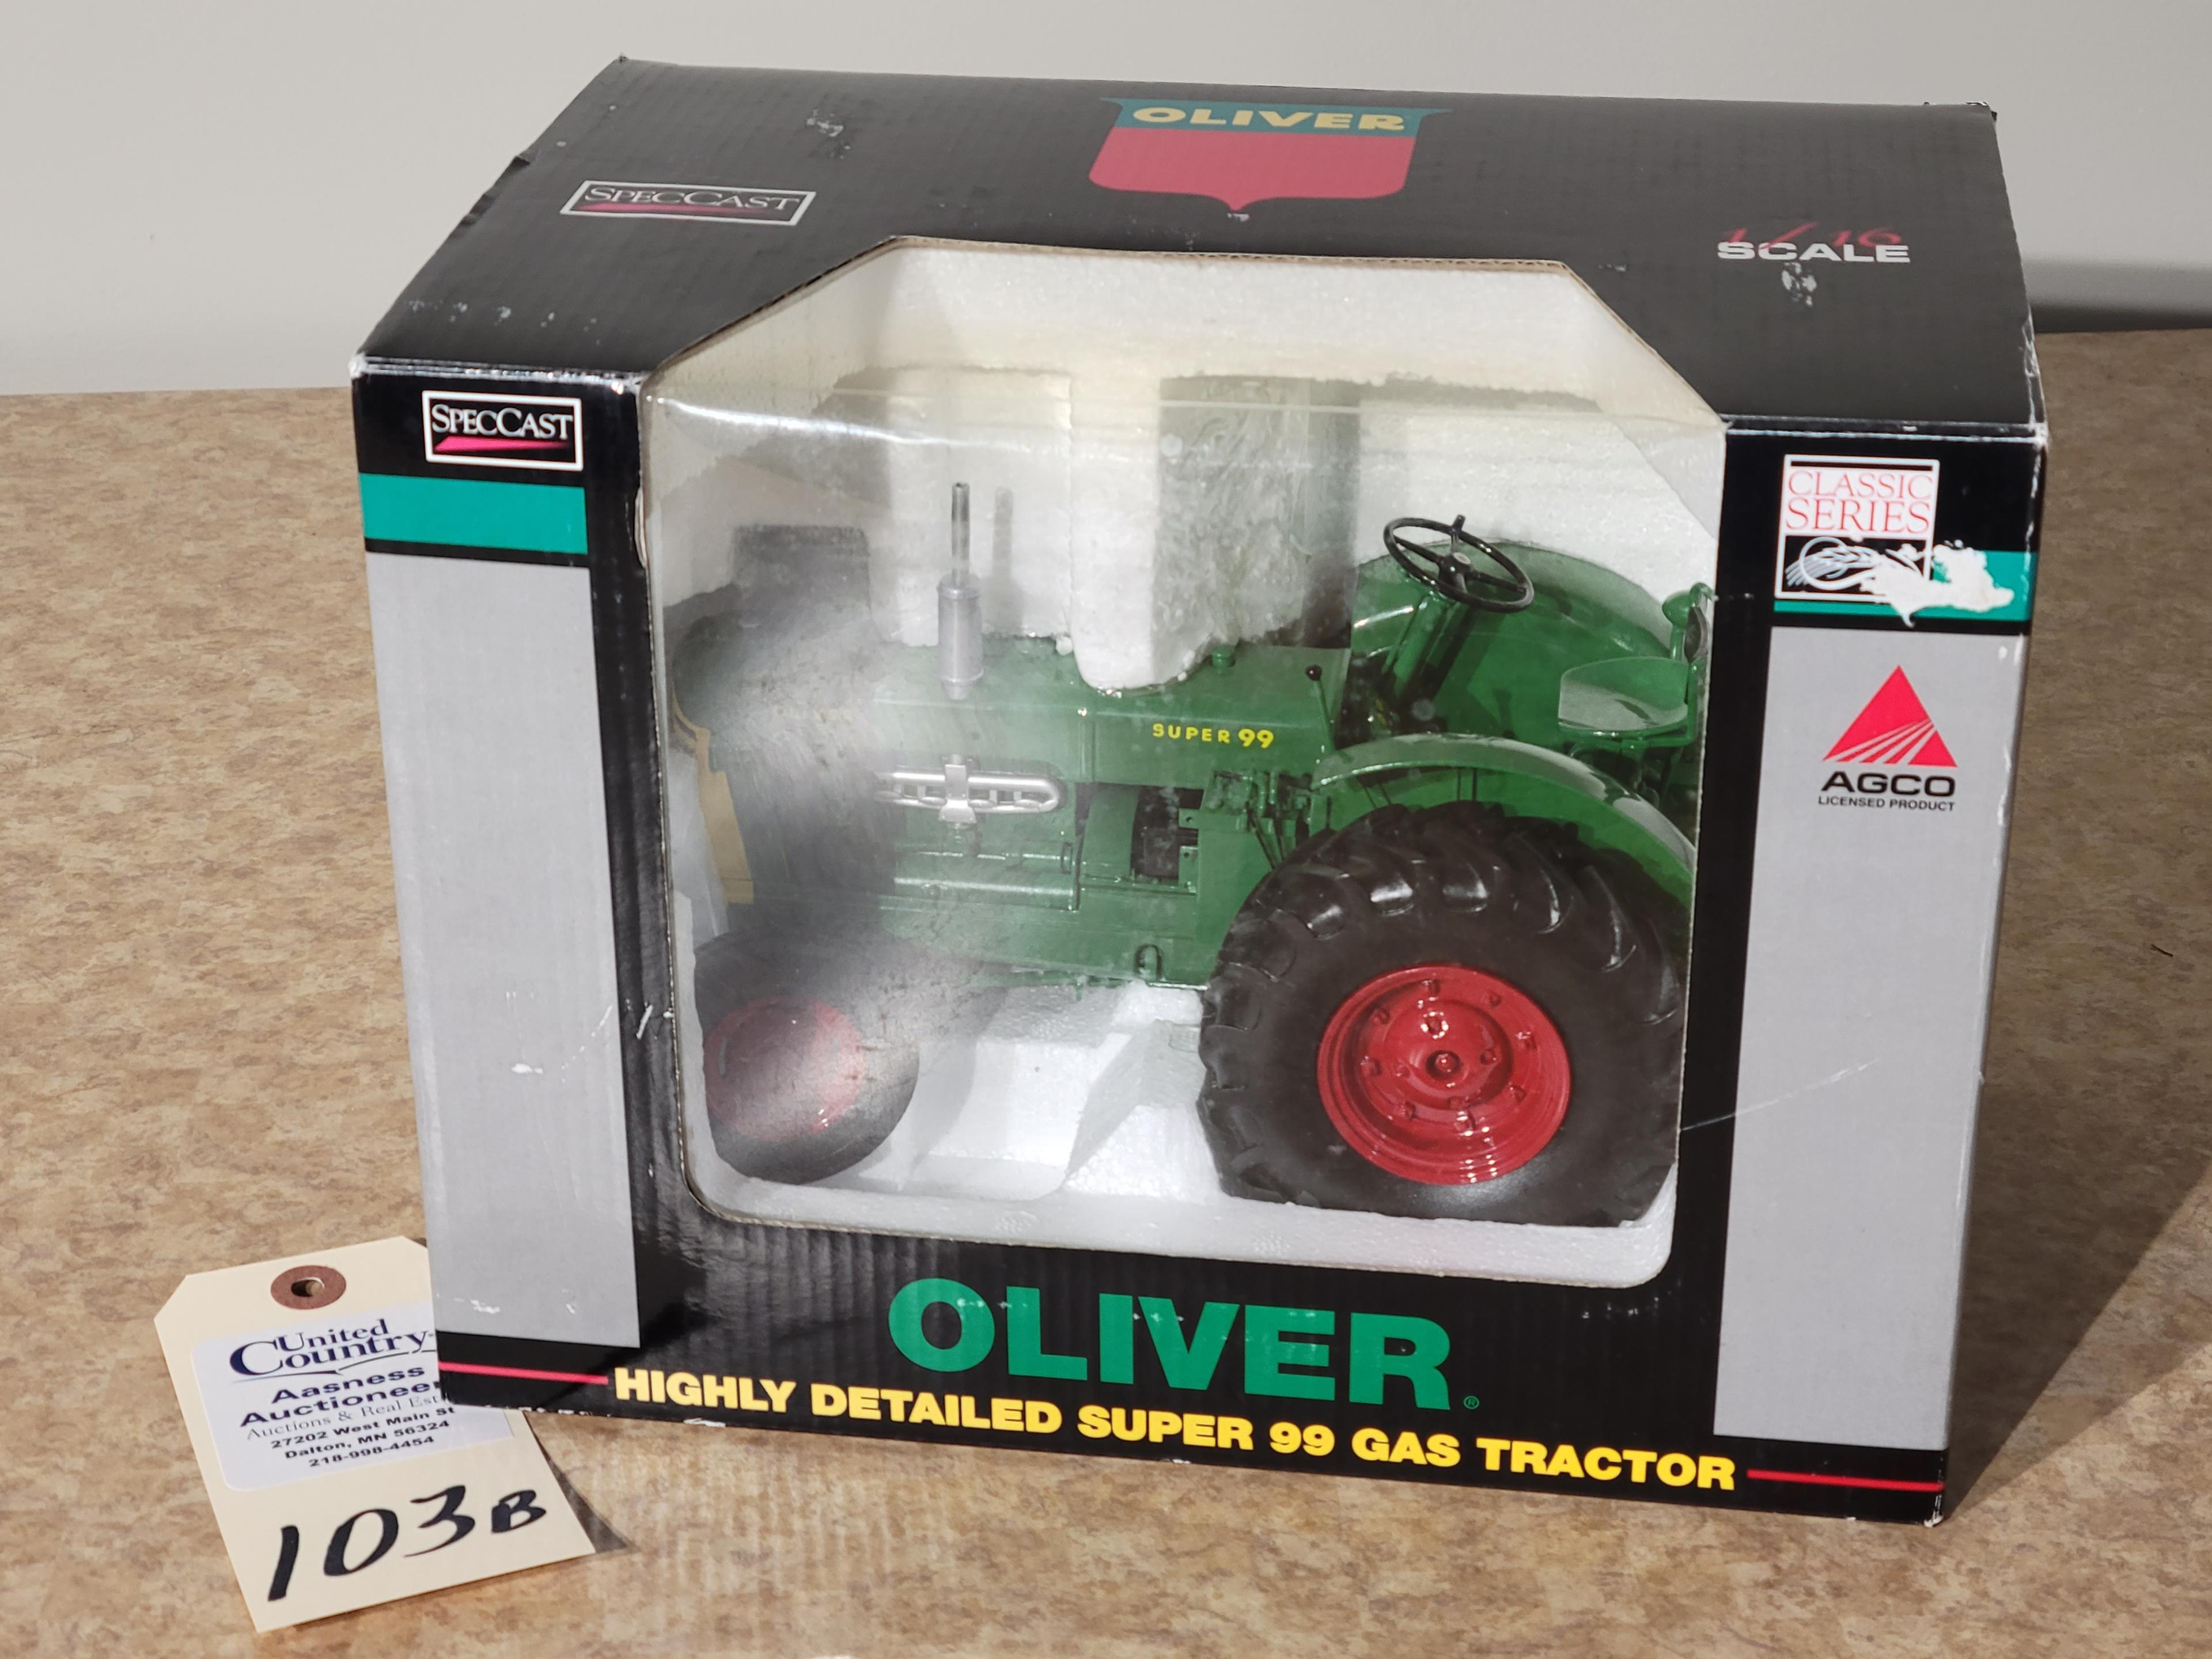 Spec Cast Classic Series Oliver Super 99 Gas Tractor 1/16 Die Cast (NIB)